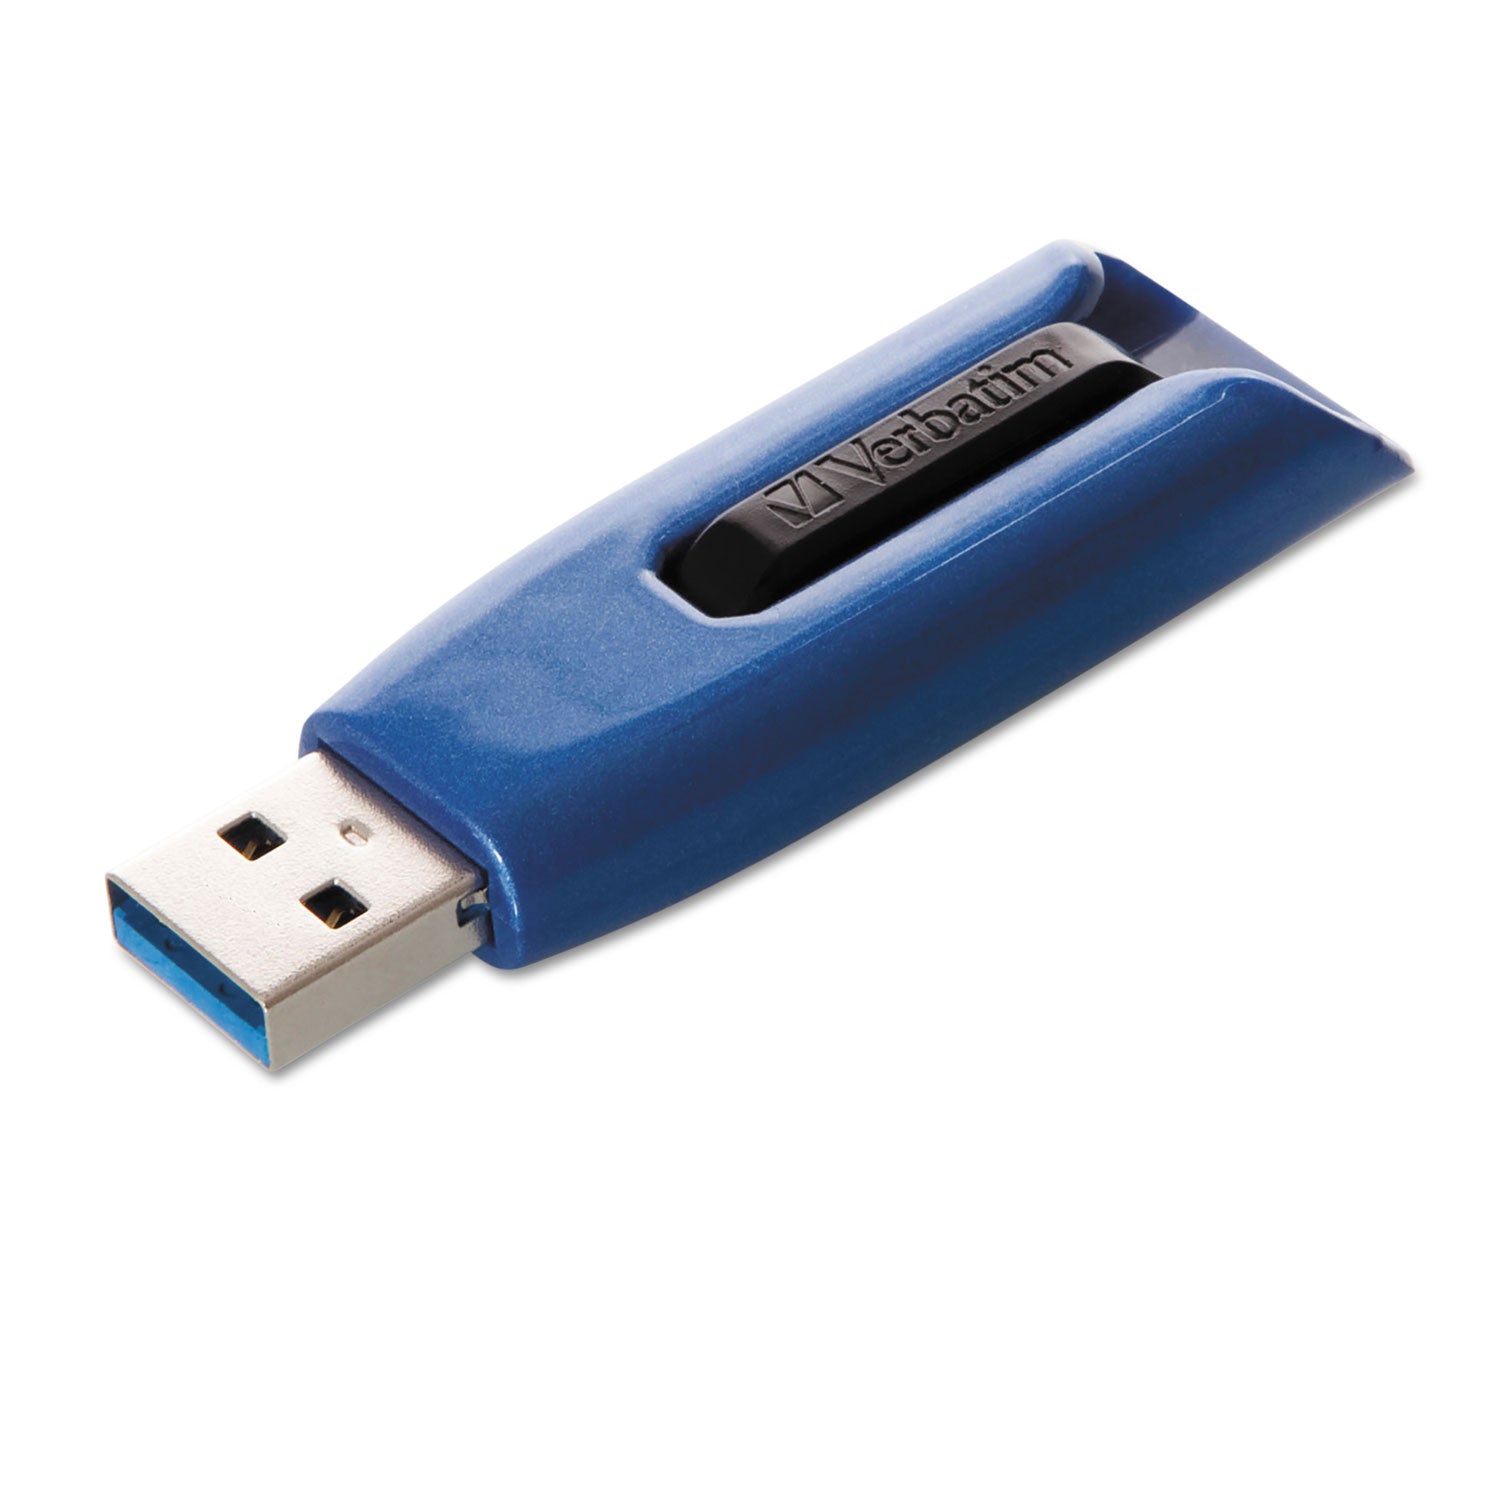 V3 Max USB 3.0 Flash Drive, 128 GB, Blue - 